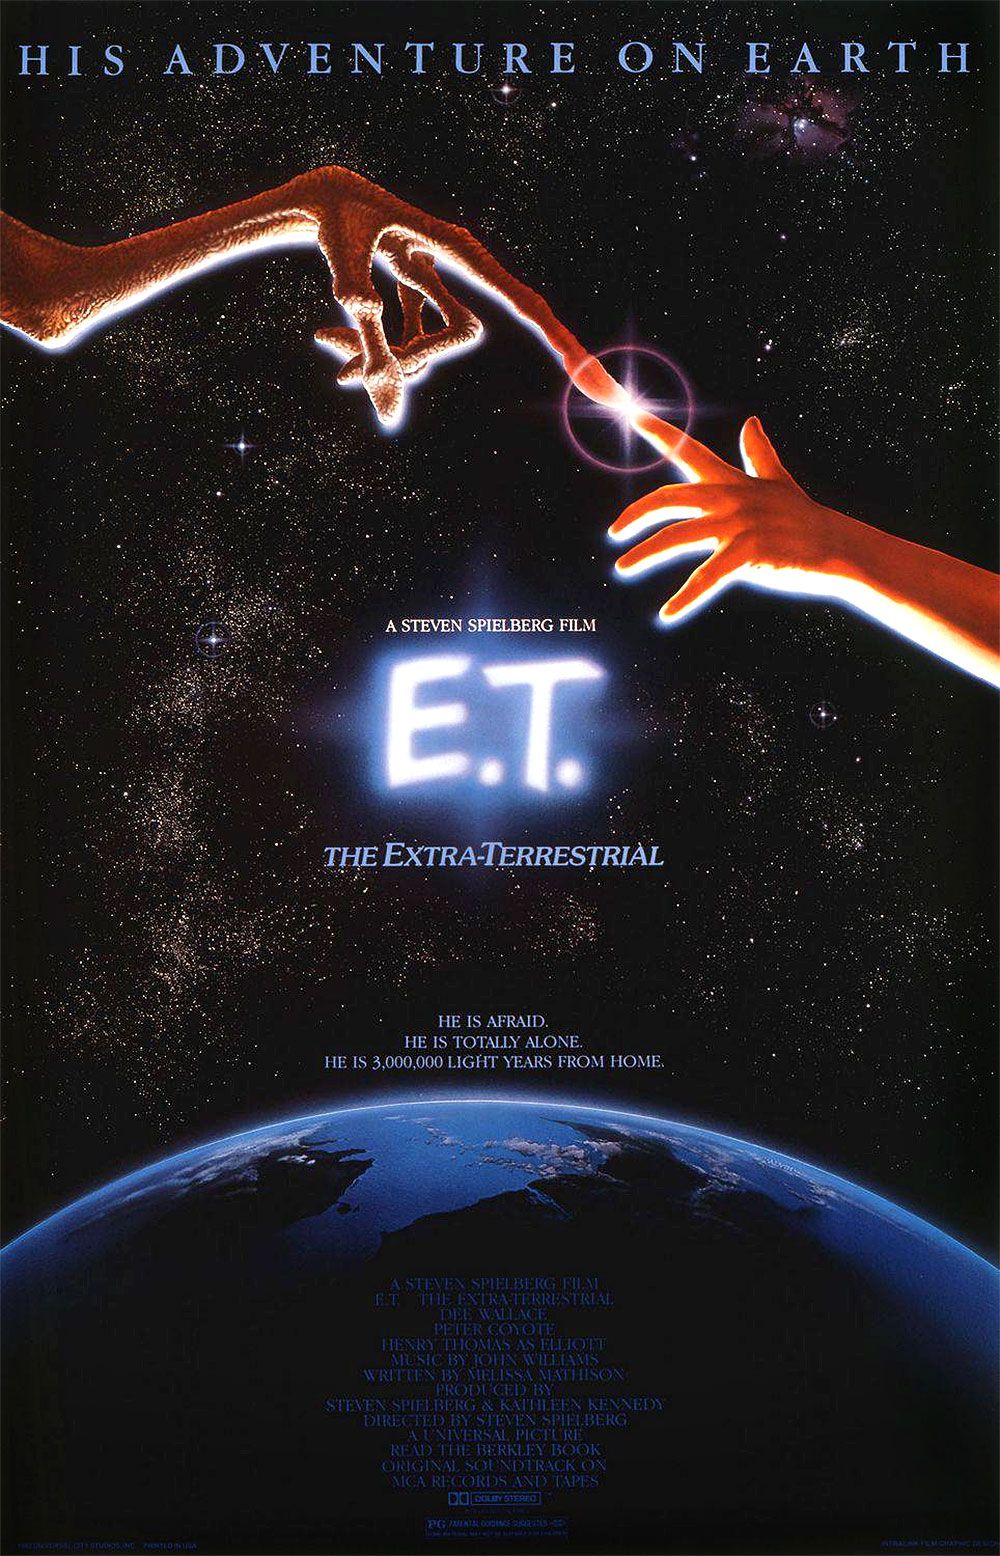 The original 1980s poster for E.T.